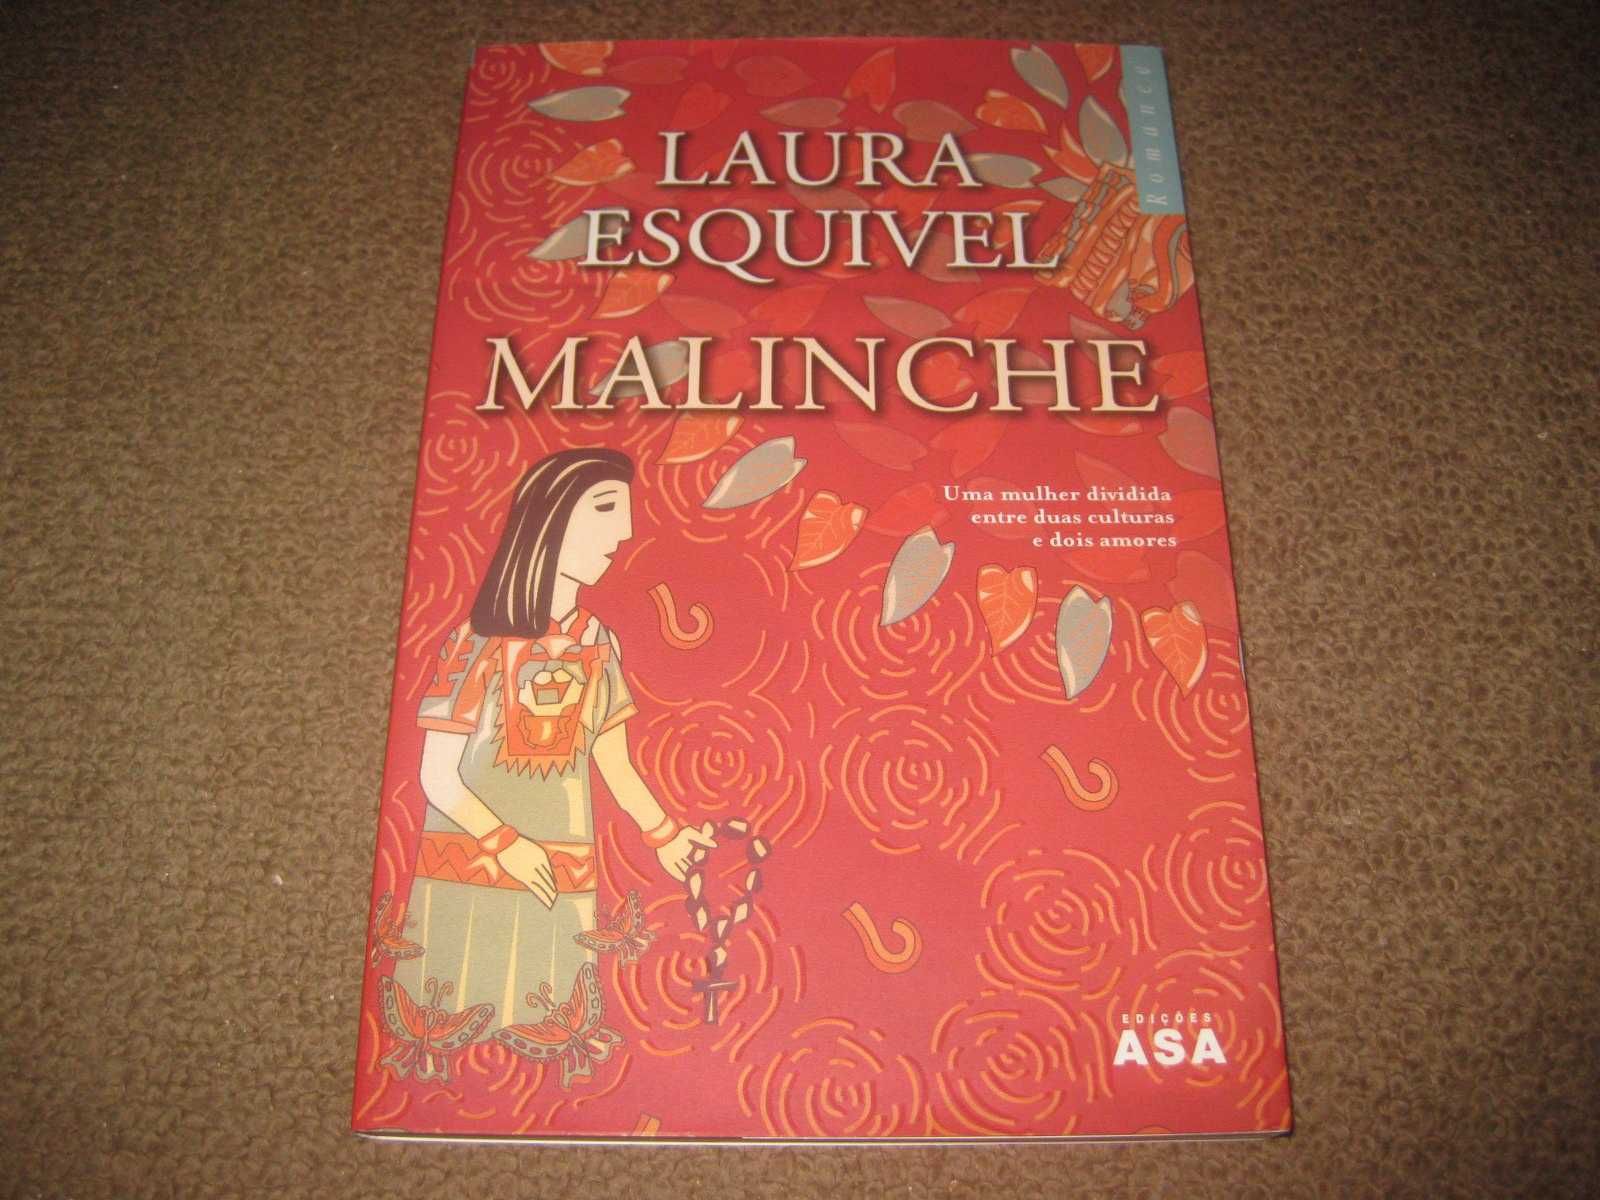 Livro "Malinche" de Laura Esquível